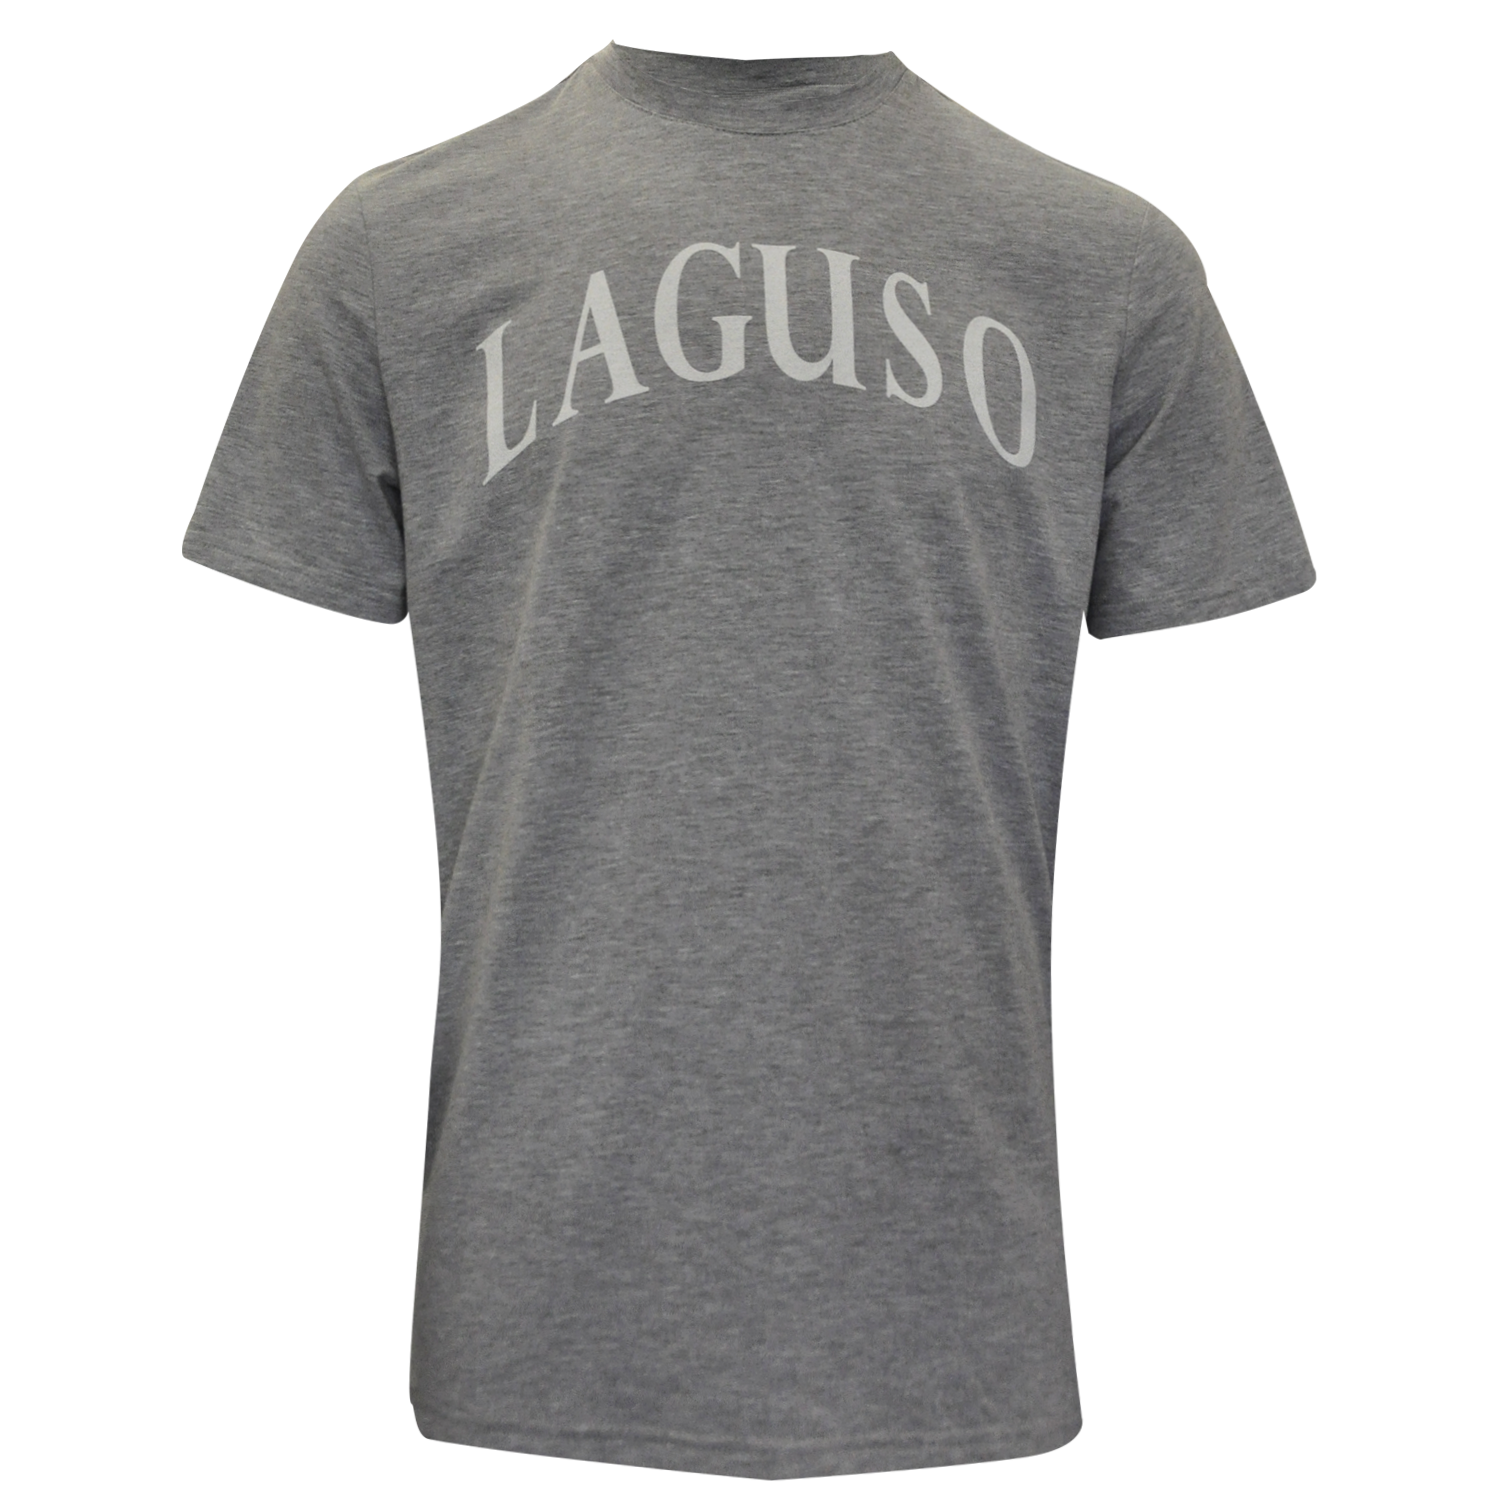 T-Shirt Richy Flock Greymel von Laguso